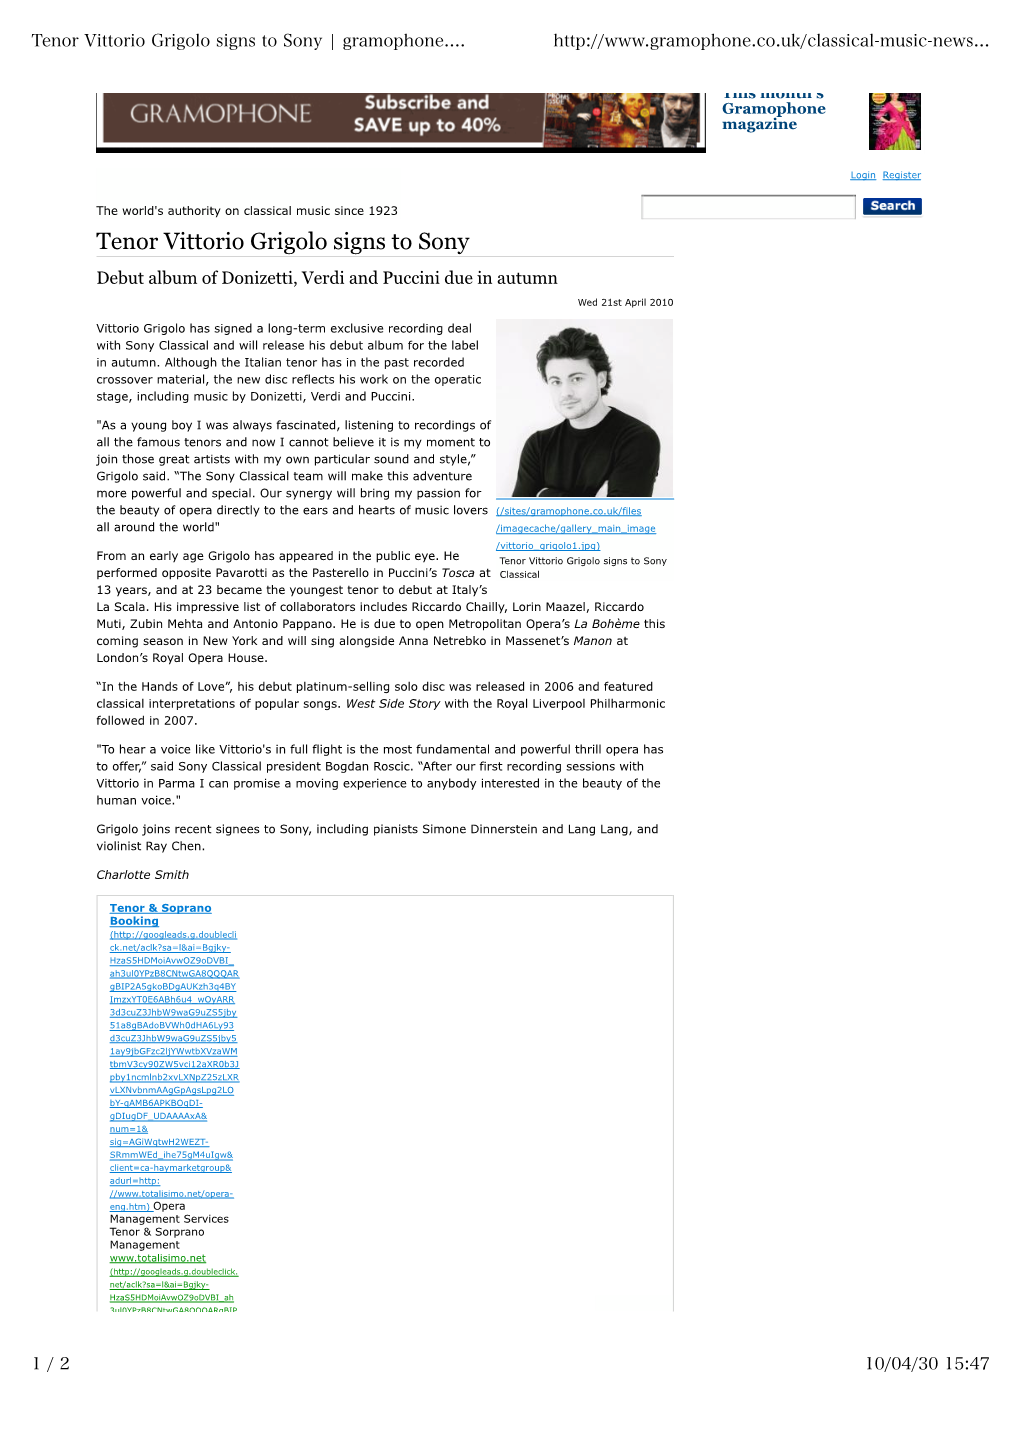 Tenor Vittorio Grigolo Signs to Sony | Gramophone.Co.Uk